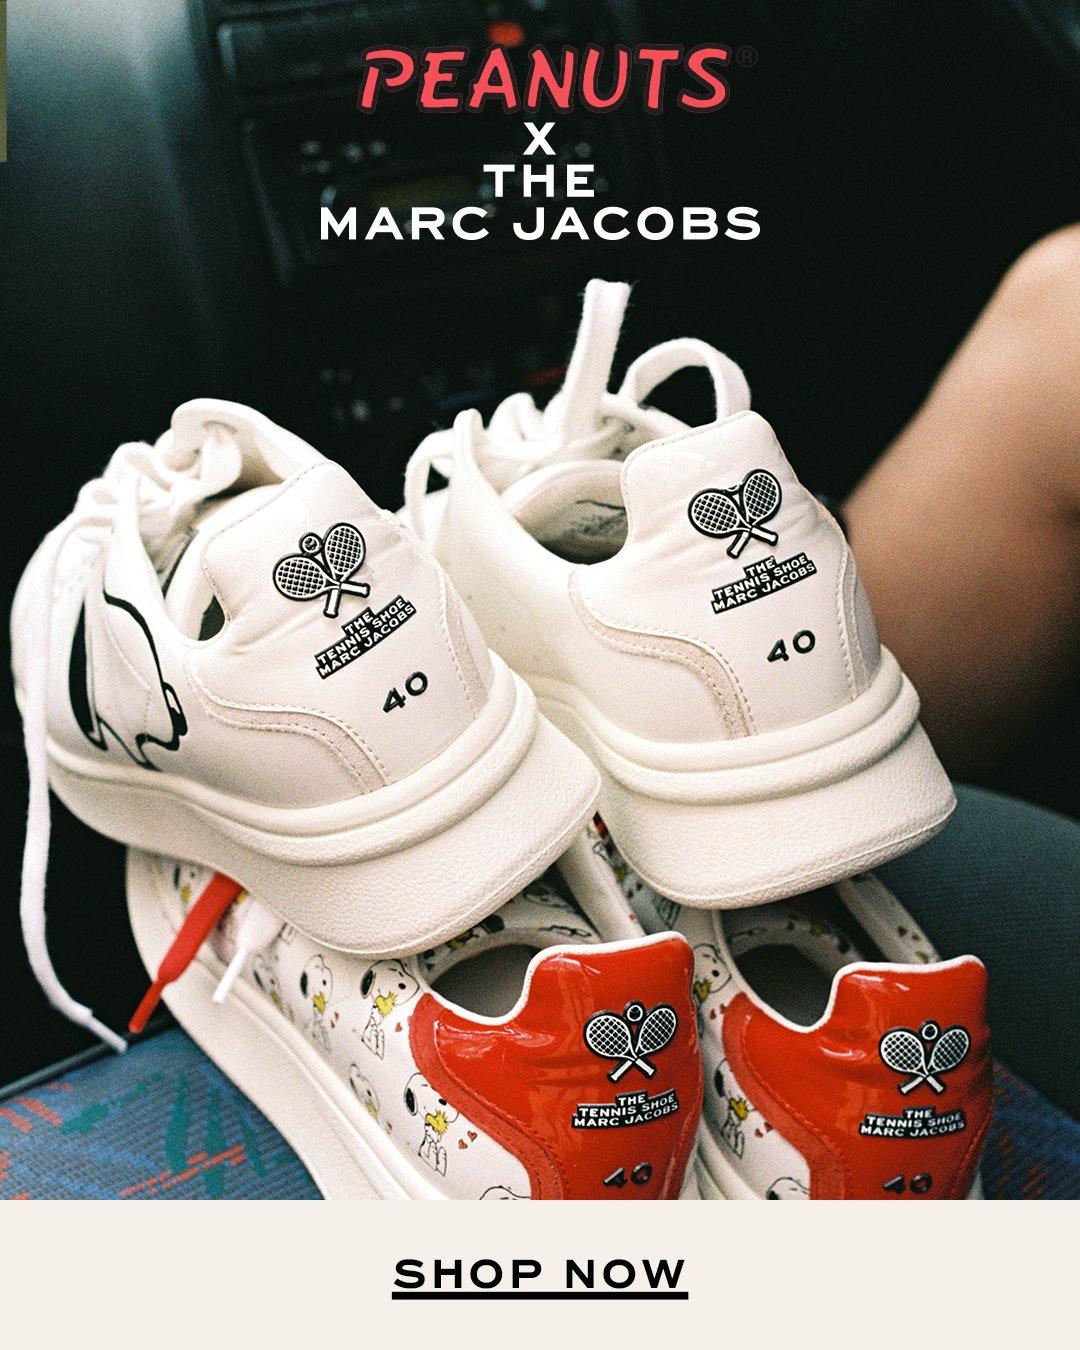 marc jacobs peanuts shoes